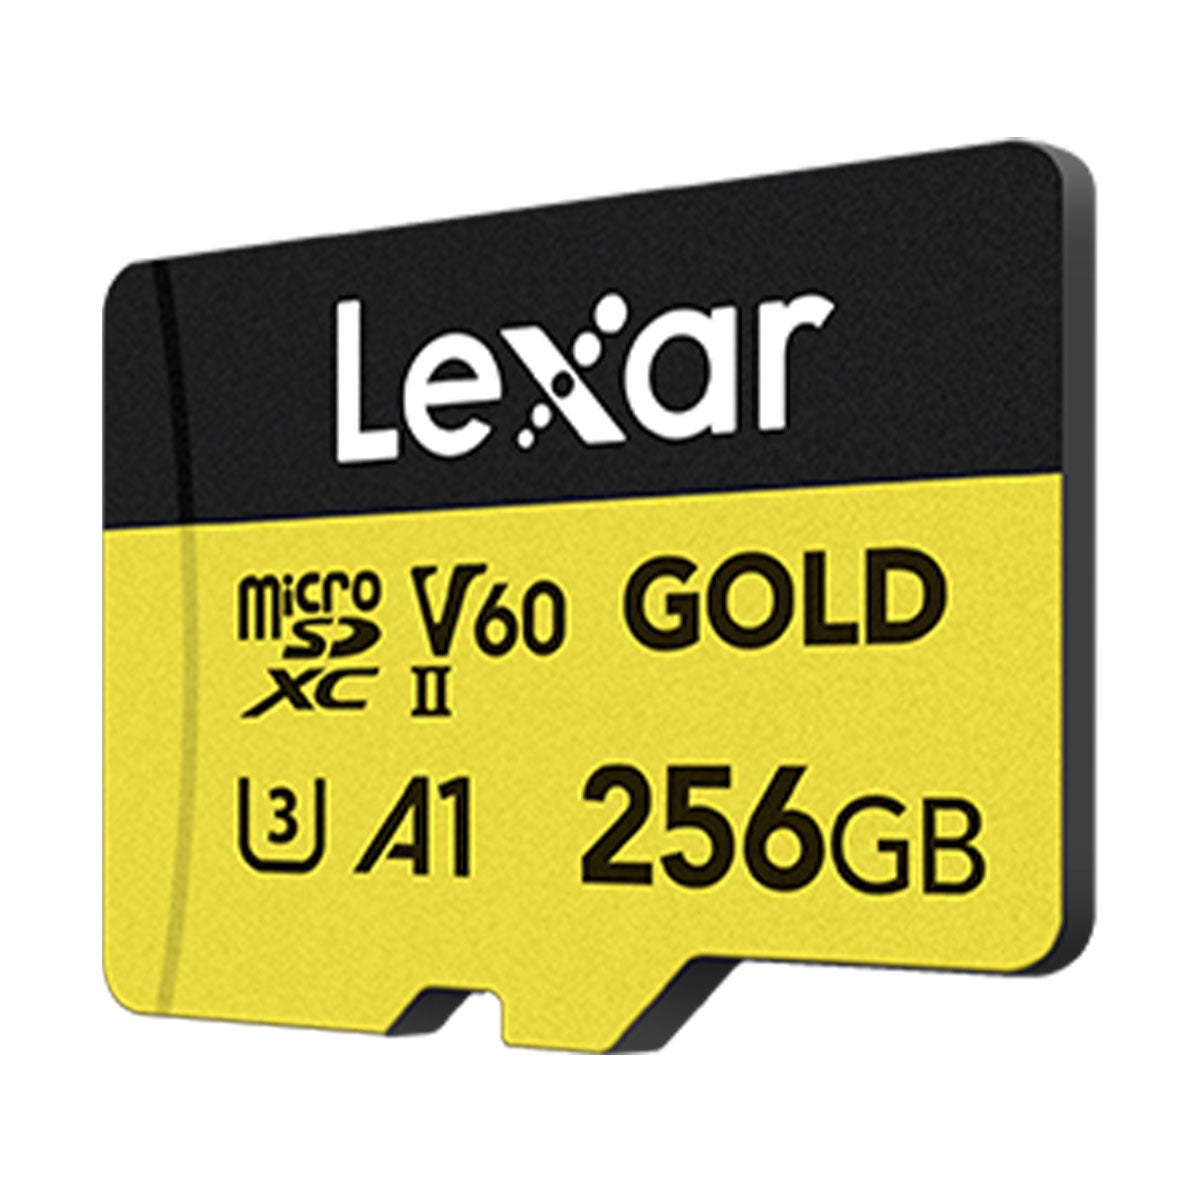 Lexar 256GB Professional GOLD UHS-II microSDXC (V60) Memory Card